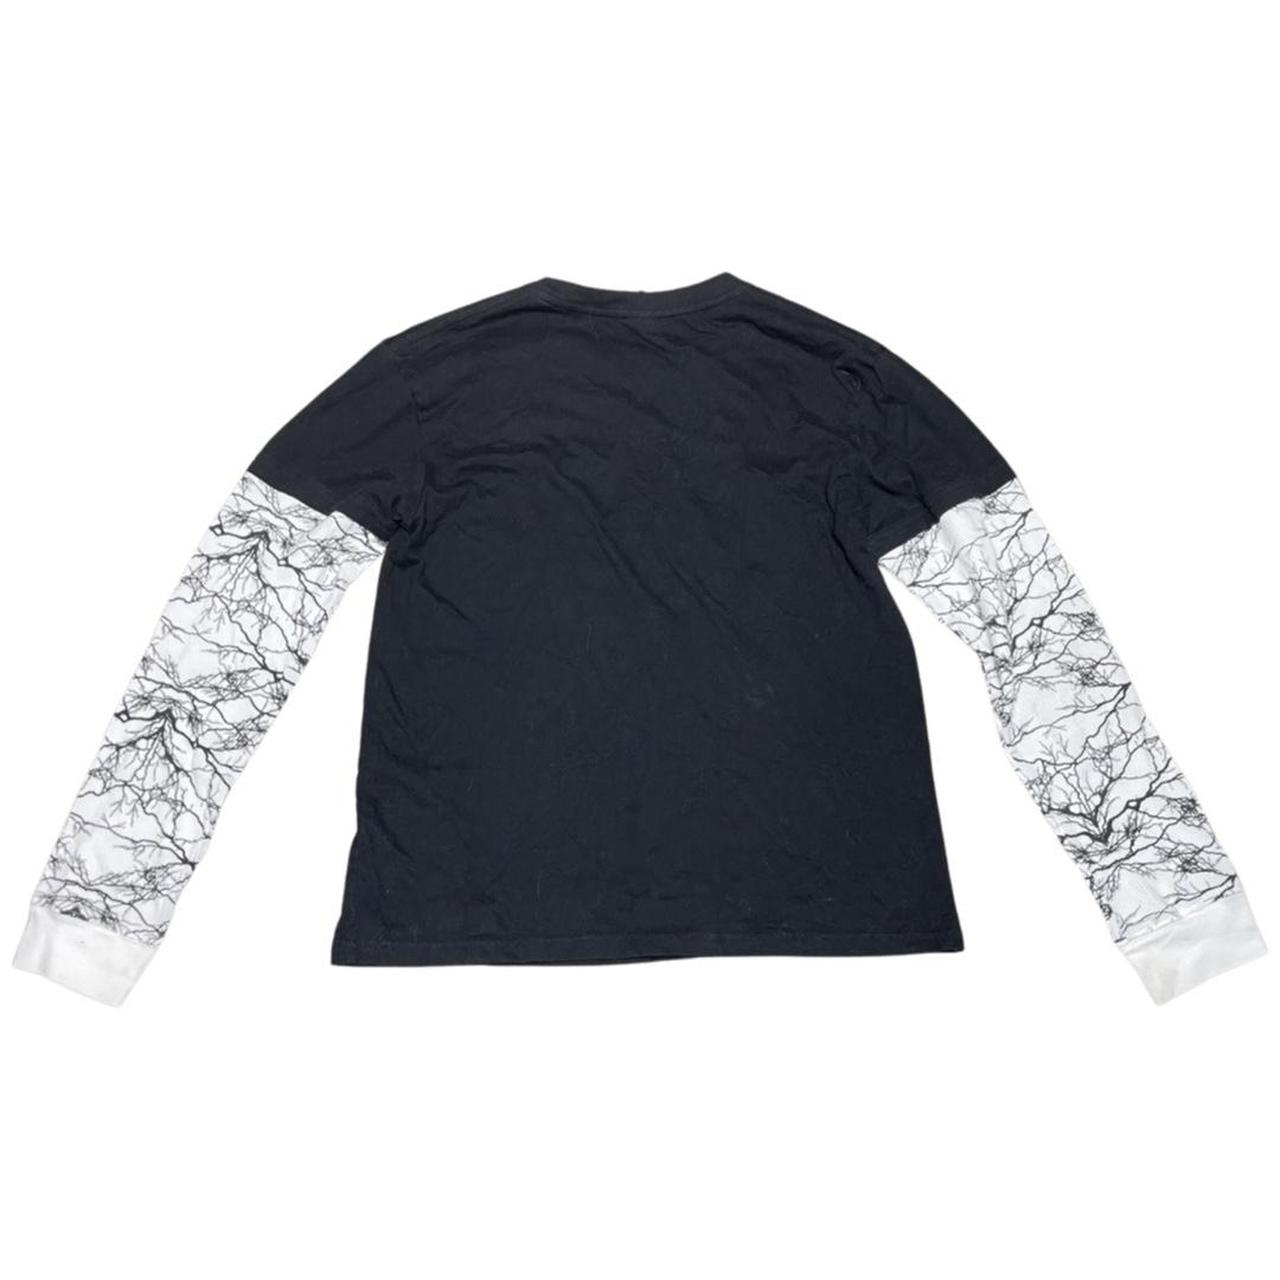 Hybrid Apparel Black and White Shirt (3)